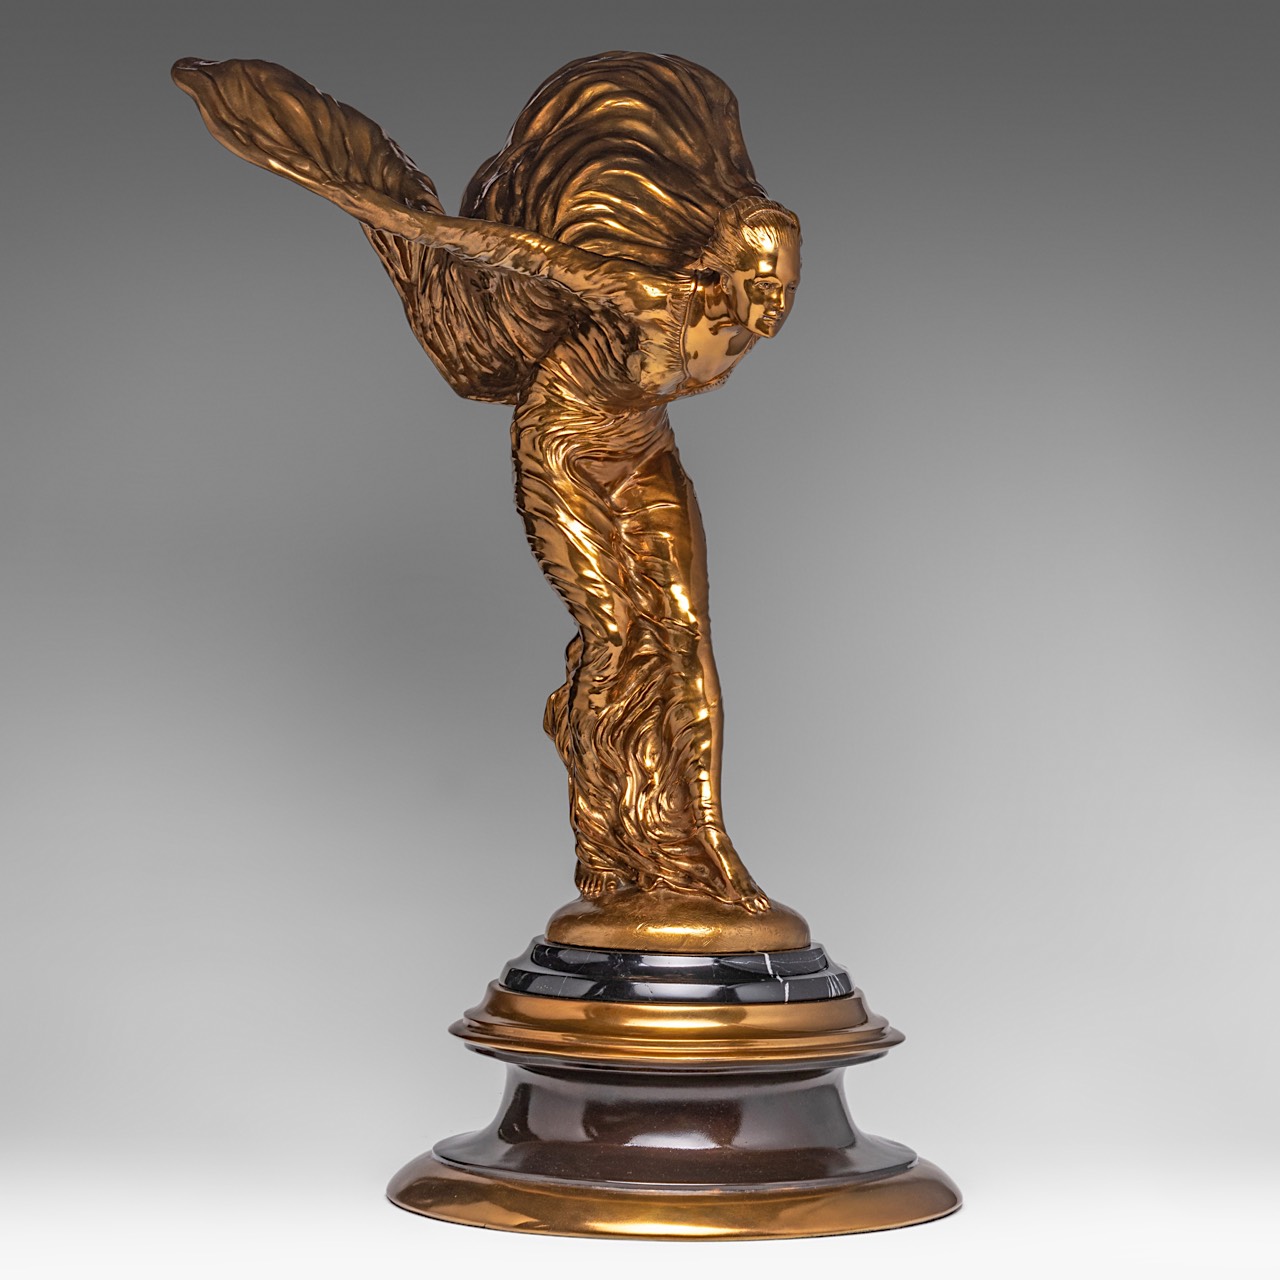 Charles Sykes (1875-1950), gilt bronze sculpture of the 'Spirit of Ecstasy', Rolls-Royce, H 69 cm